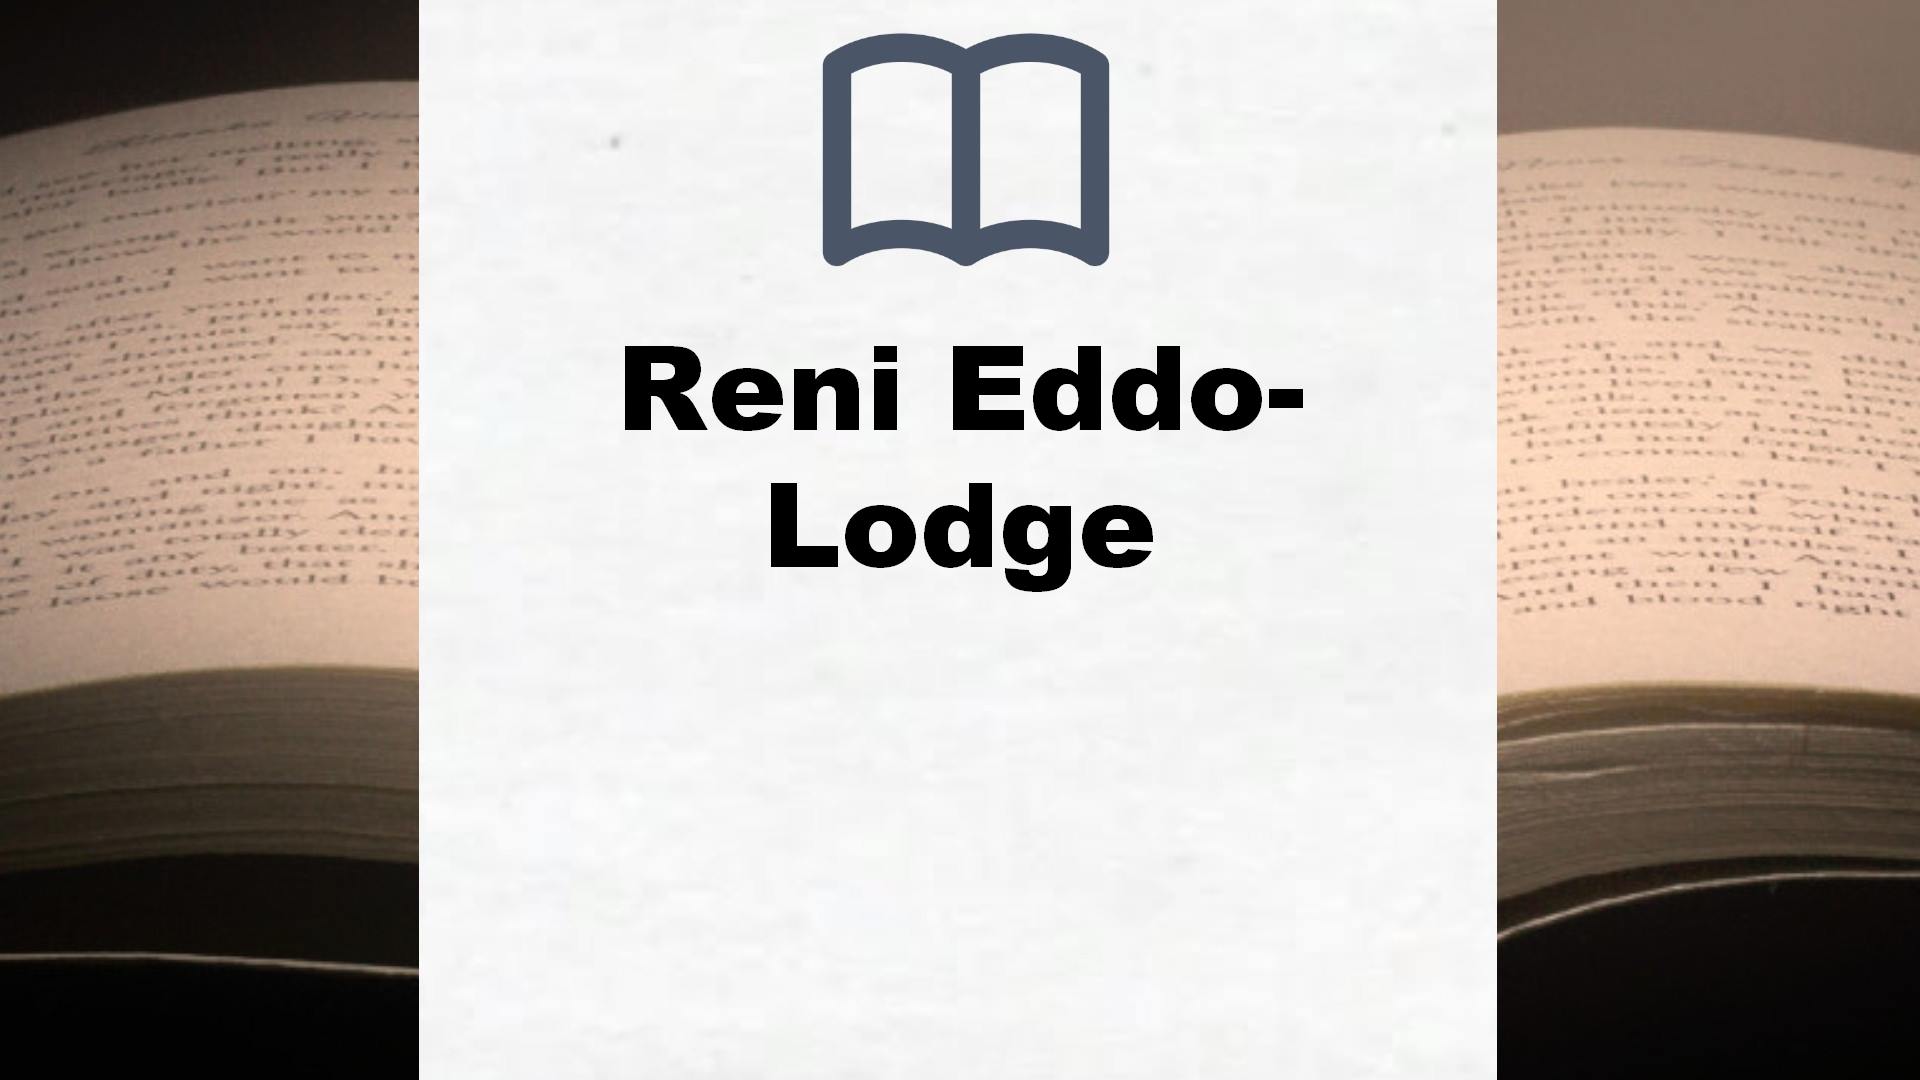 Libros Reni Eddo-Lodge